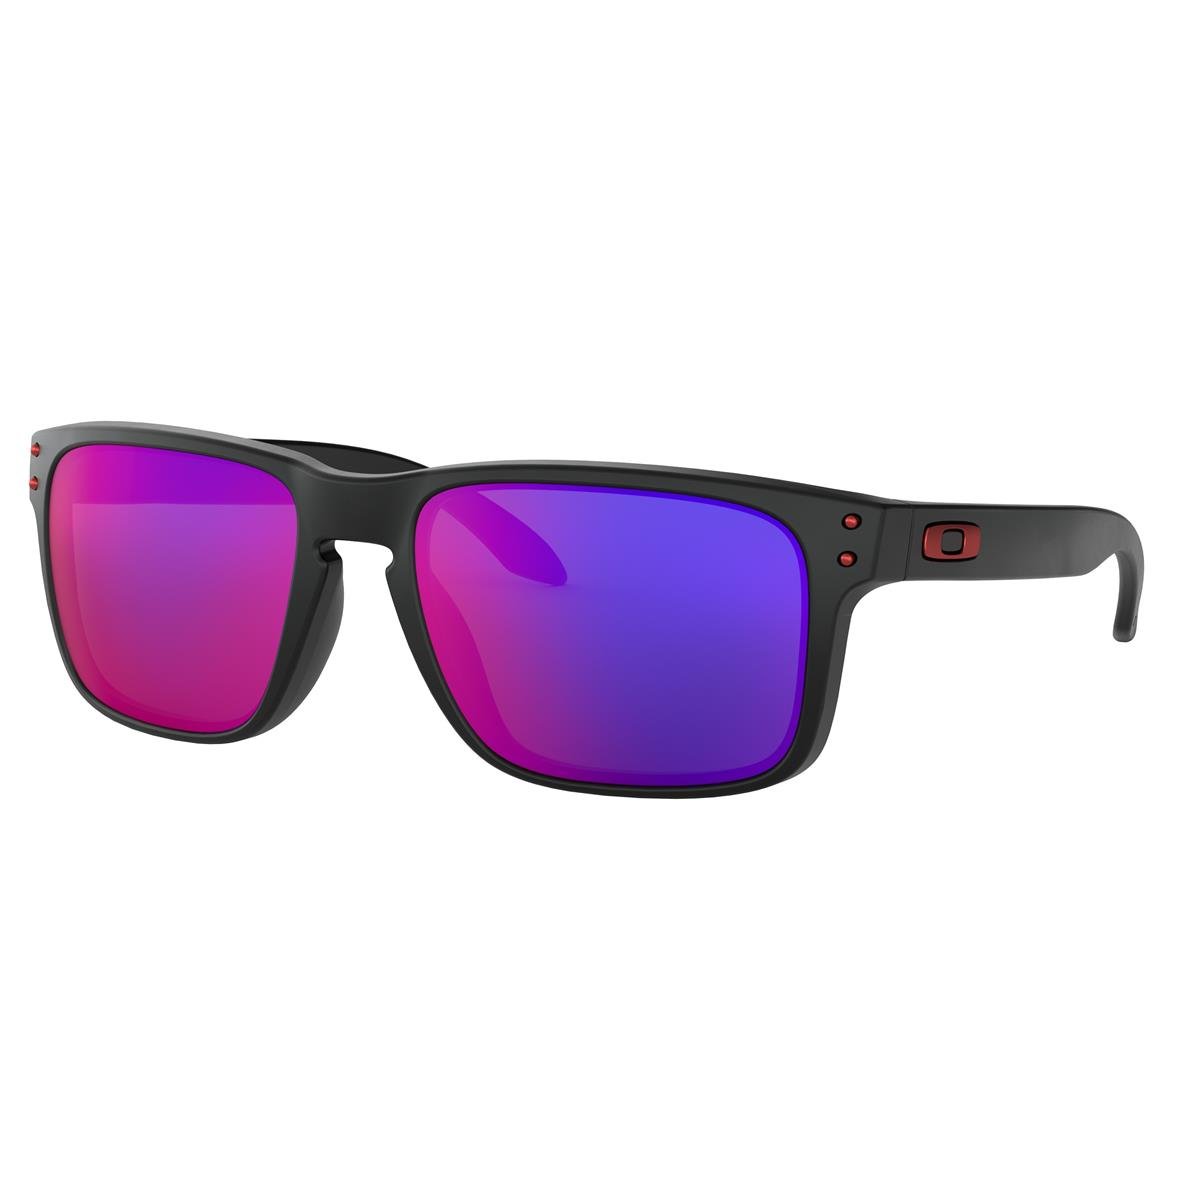 Oakley Sunglasses Holbrook Matte Black - Positive Red Iridium